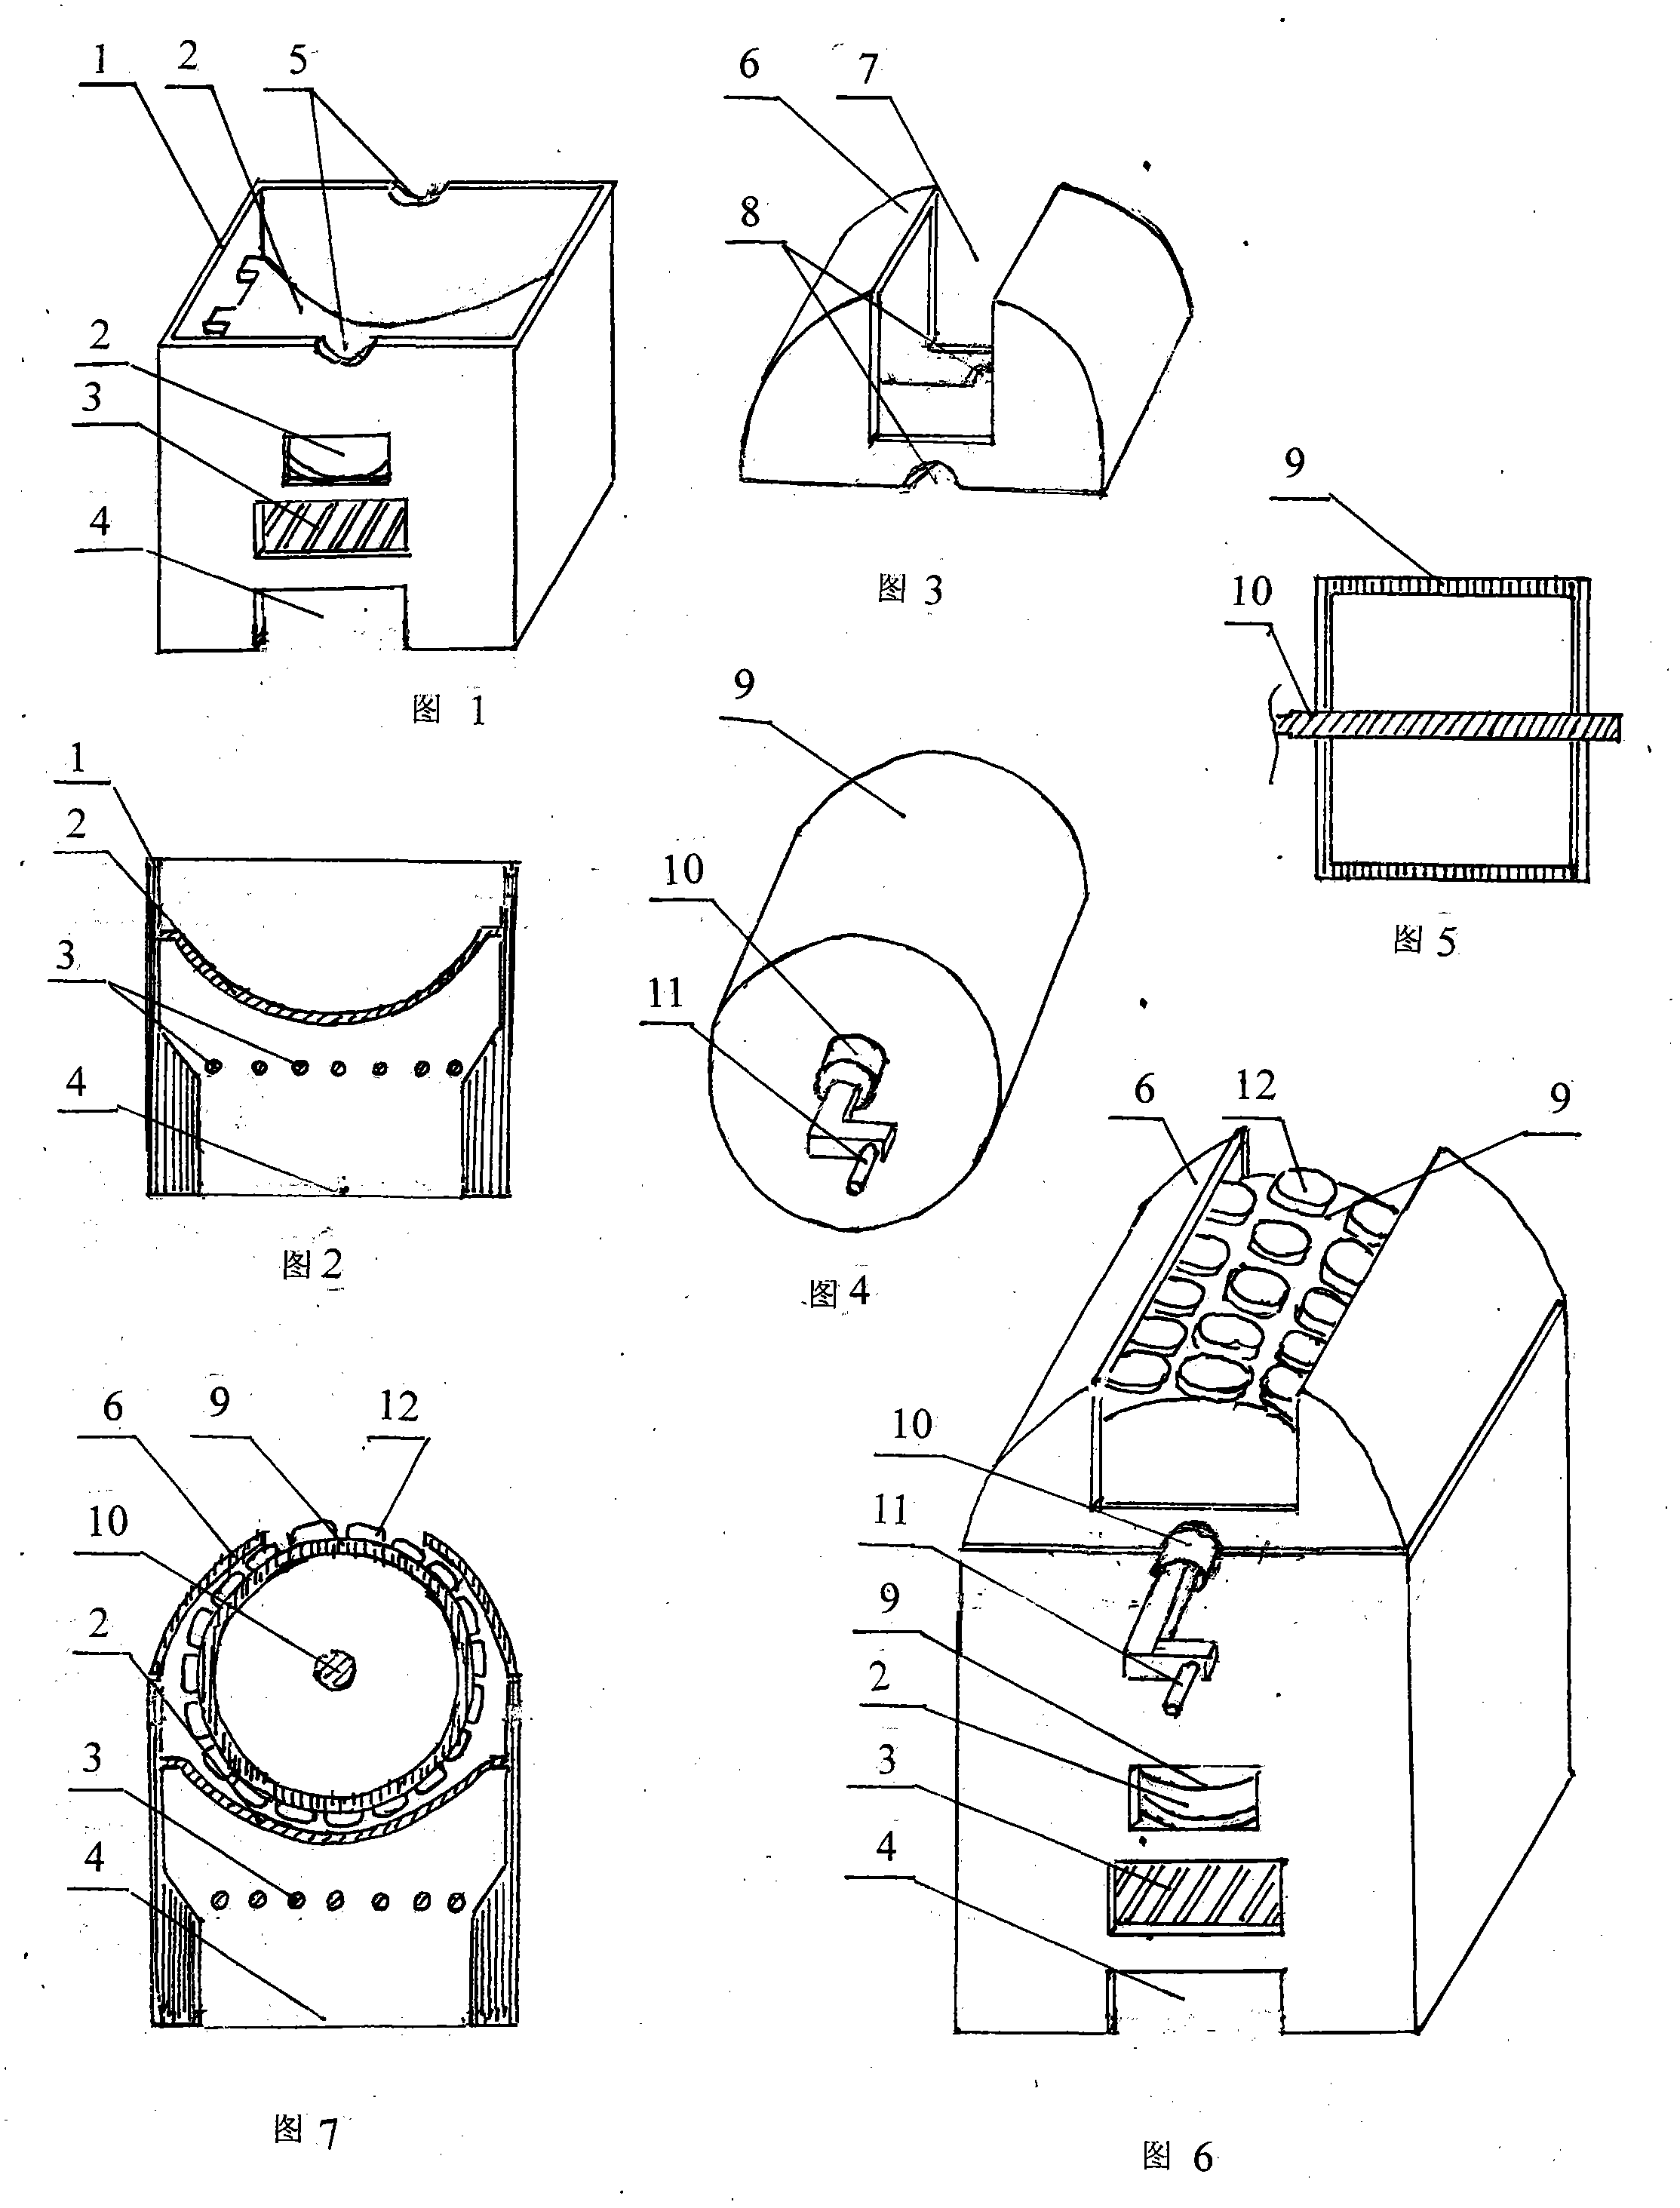 Rotating-shaft-type baked wheat cake furnace